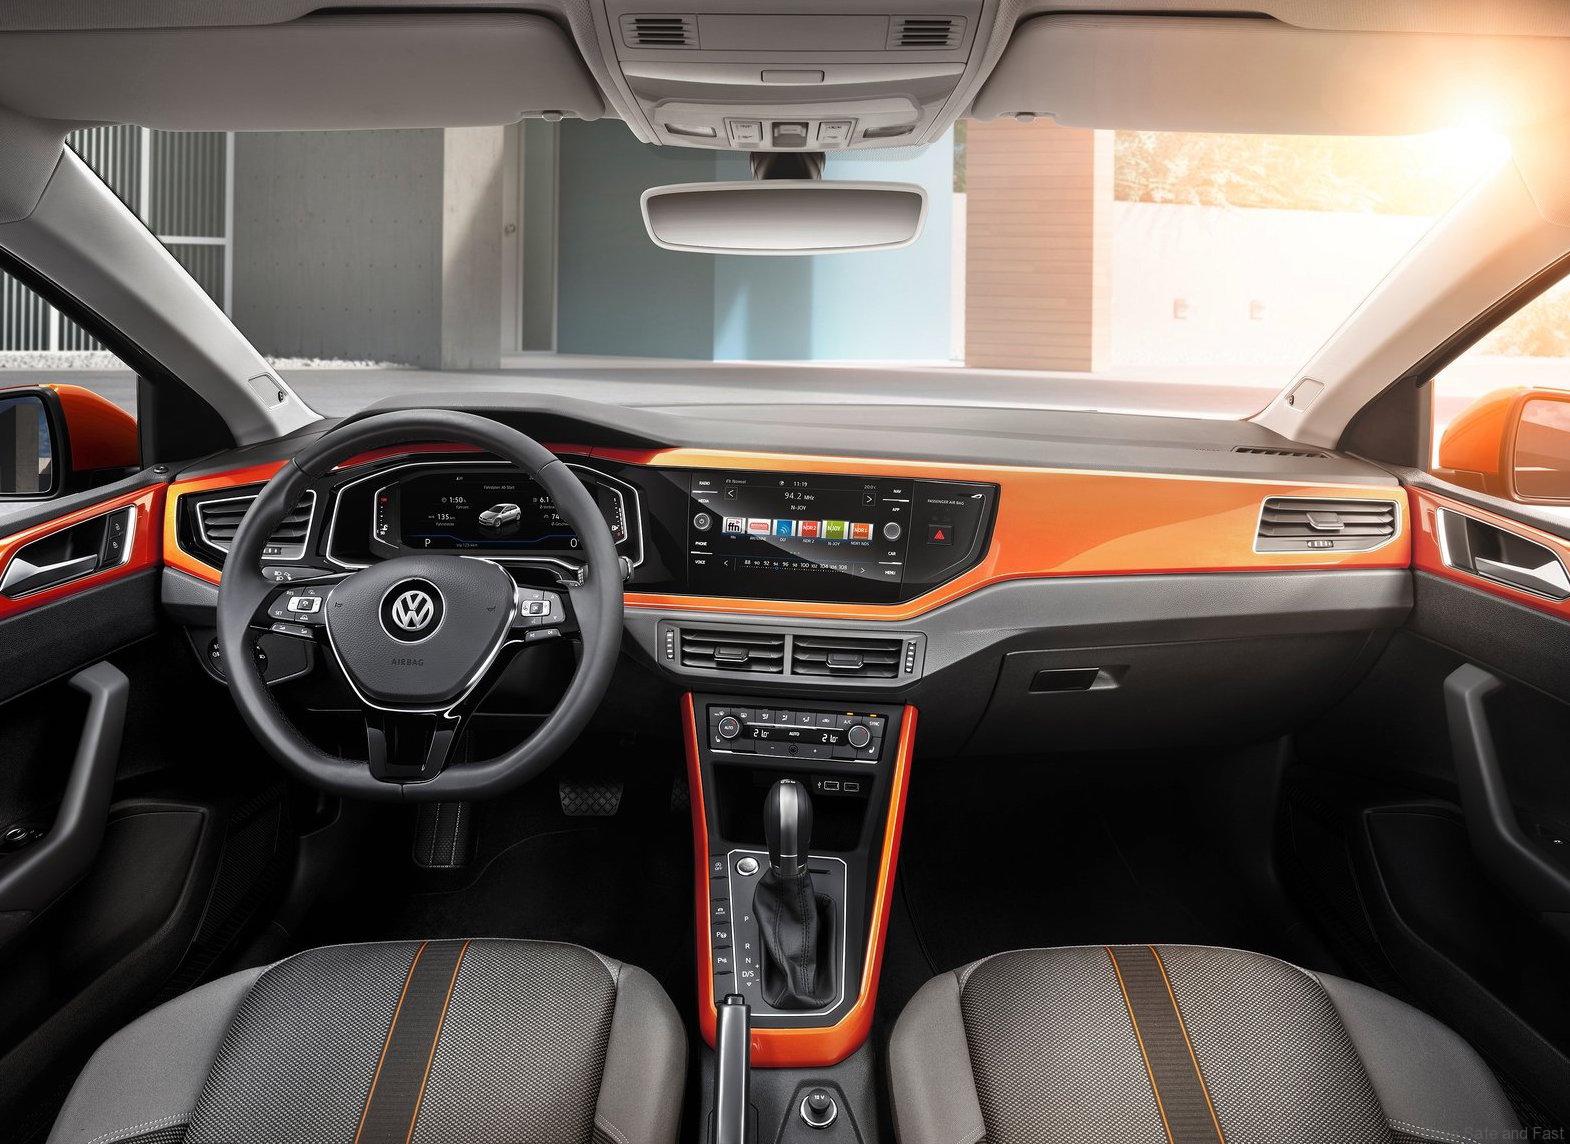 Volkswagen Polo Interior, Exterior & colour Images Malaysia